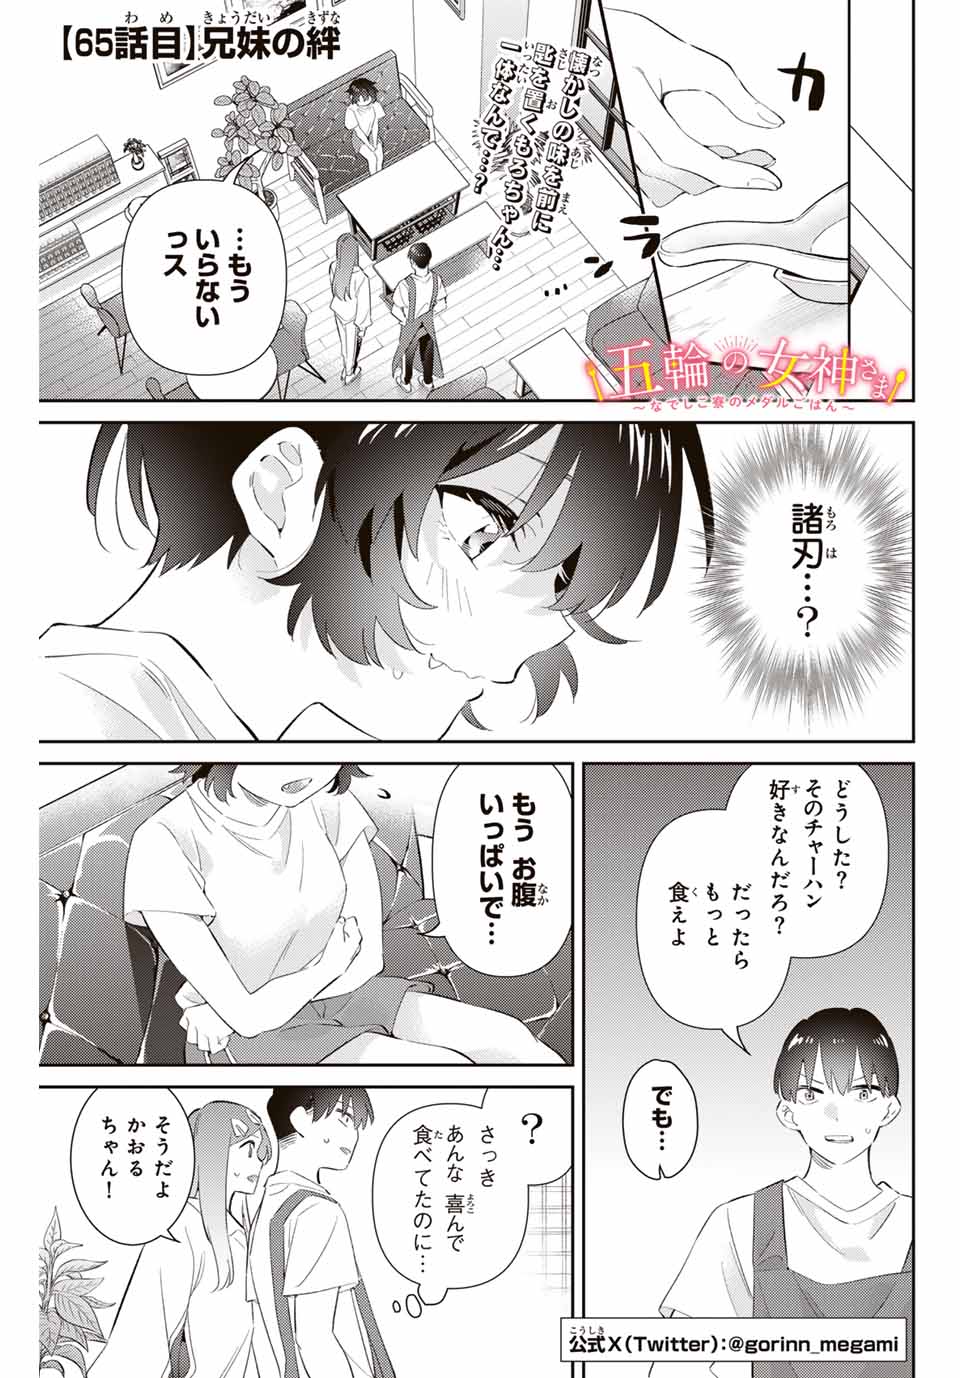 Gorin No Megami-sama: Nadeshiko Ryou No Medal Gohan - Chapter 65 - Page 1